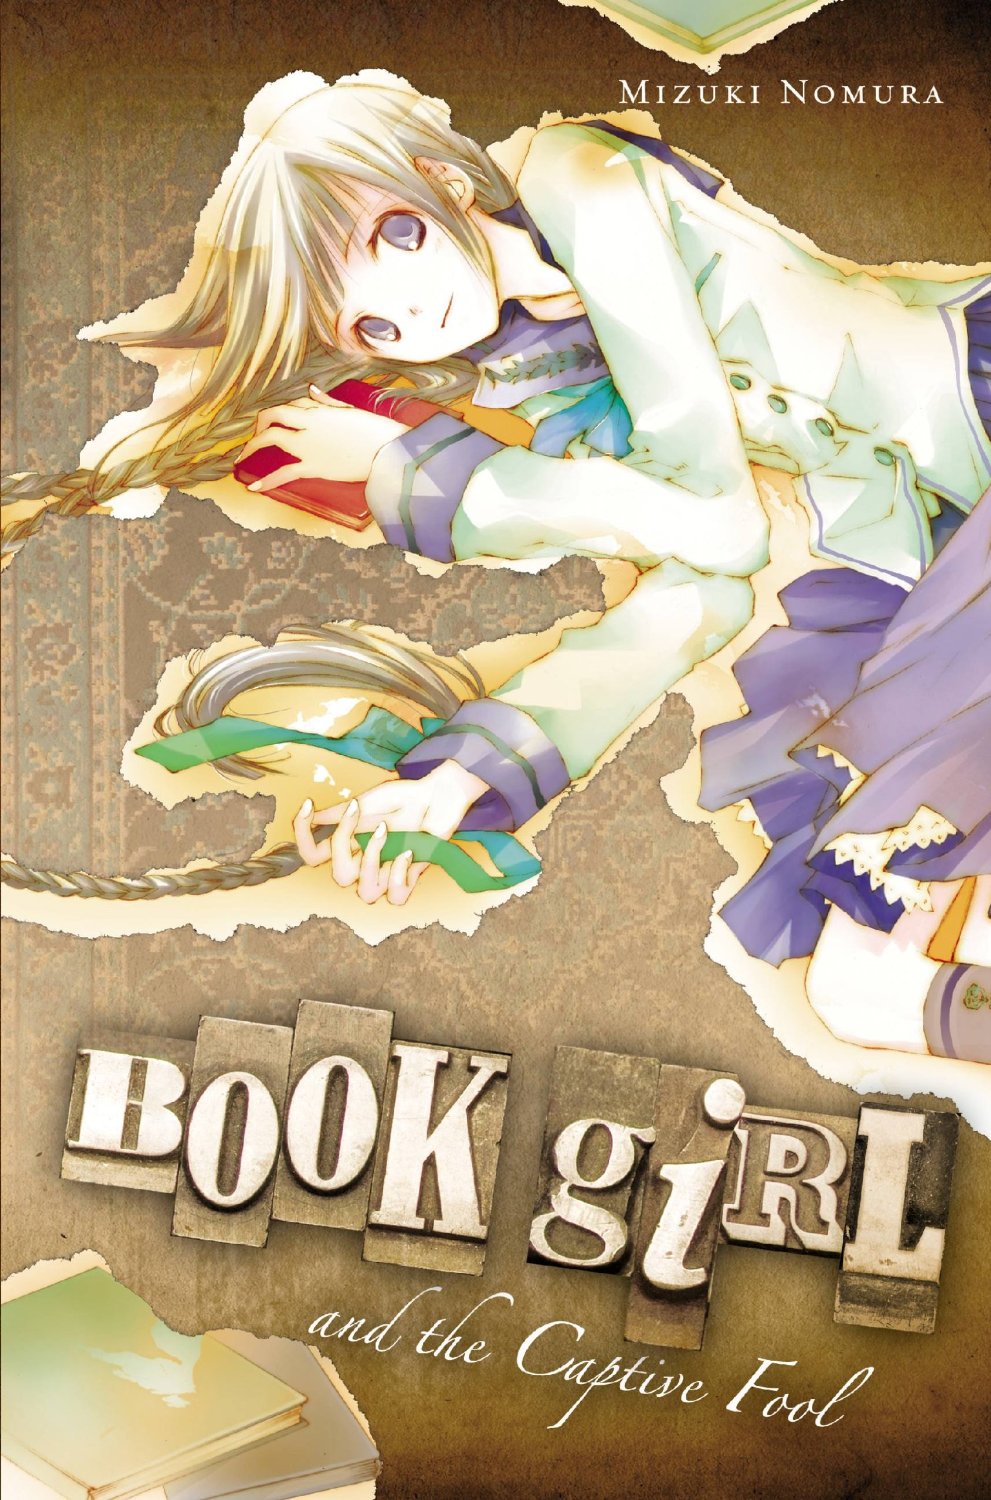 Book Girl and the Captive Fool by Mizuki Nomura